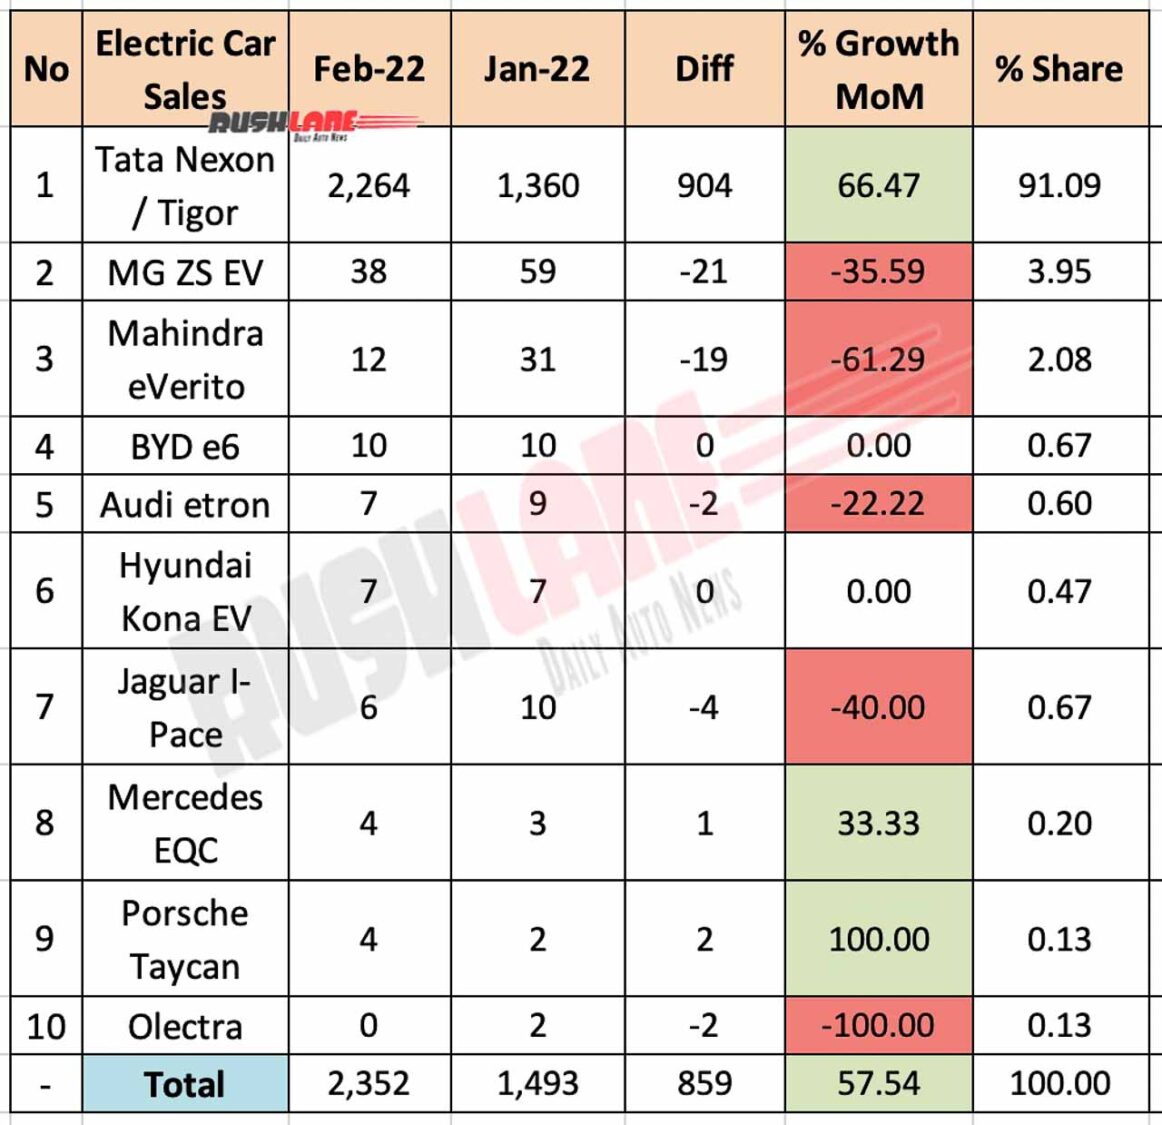 Electric Car Sales Feb 2022 vs Jan 2022 (MoM)